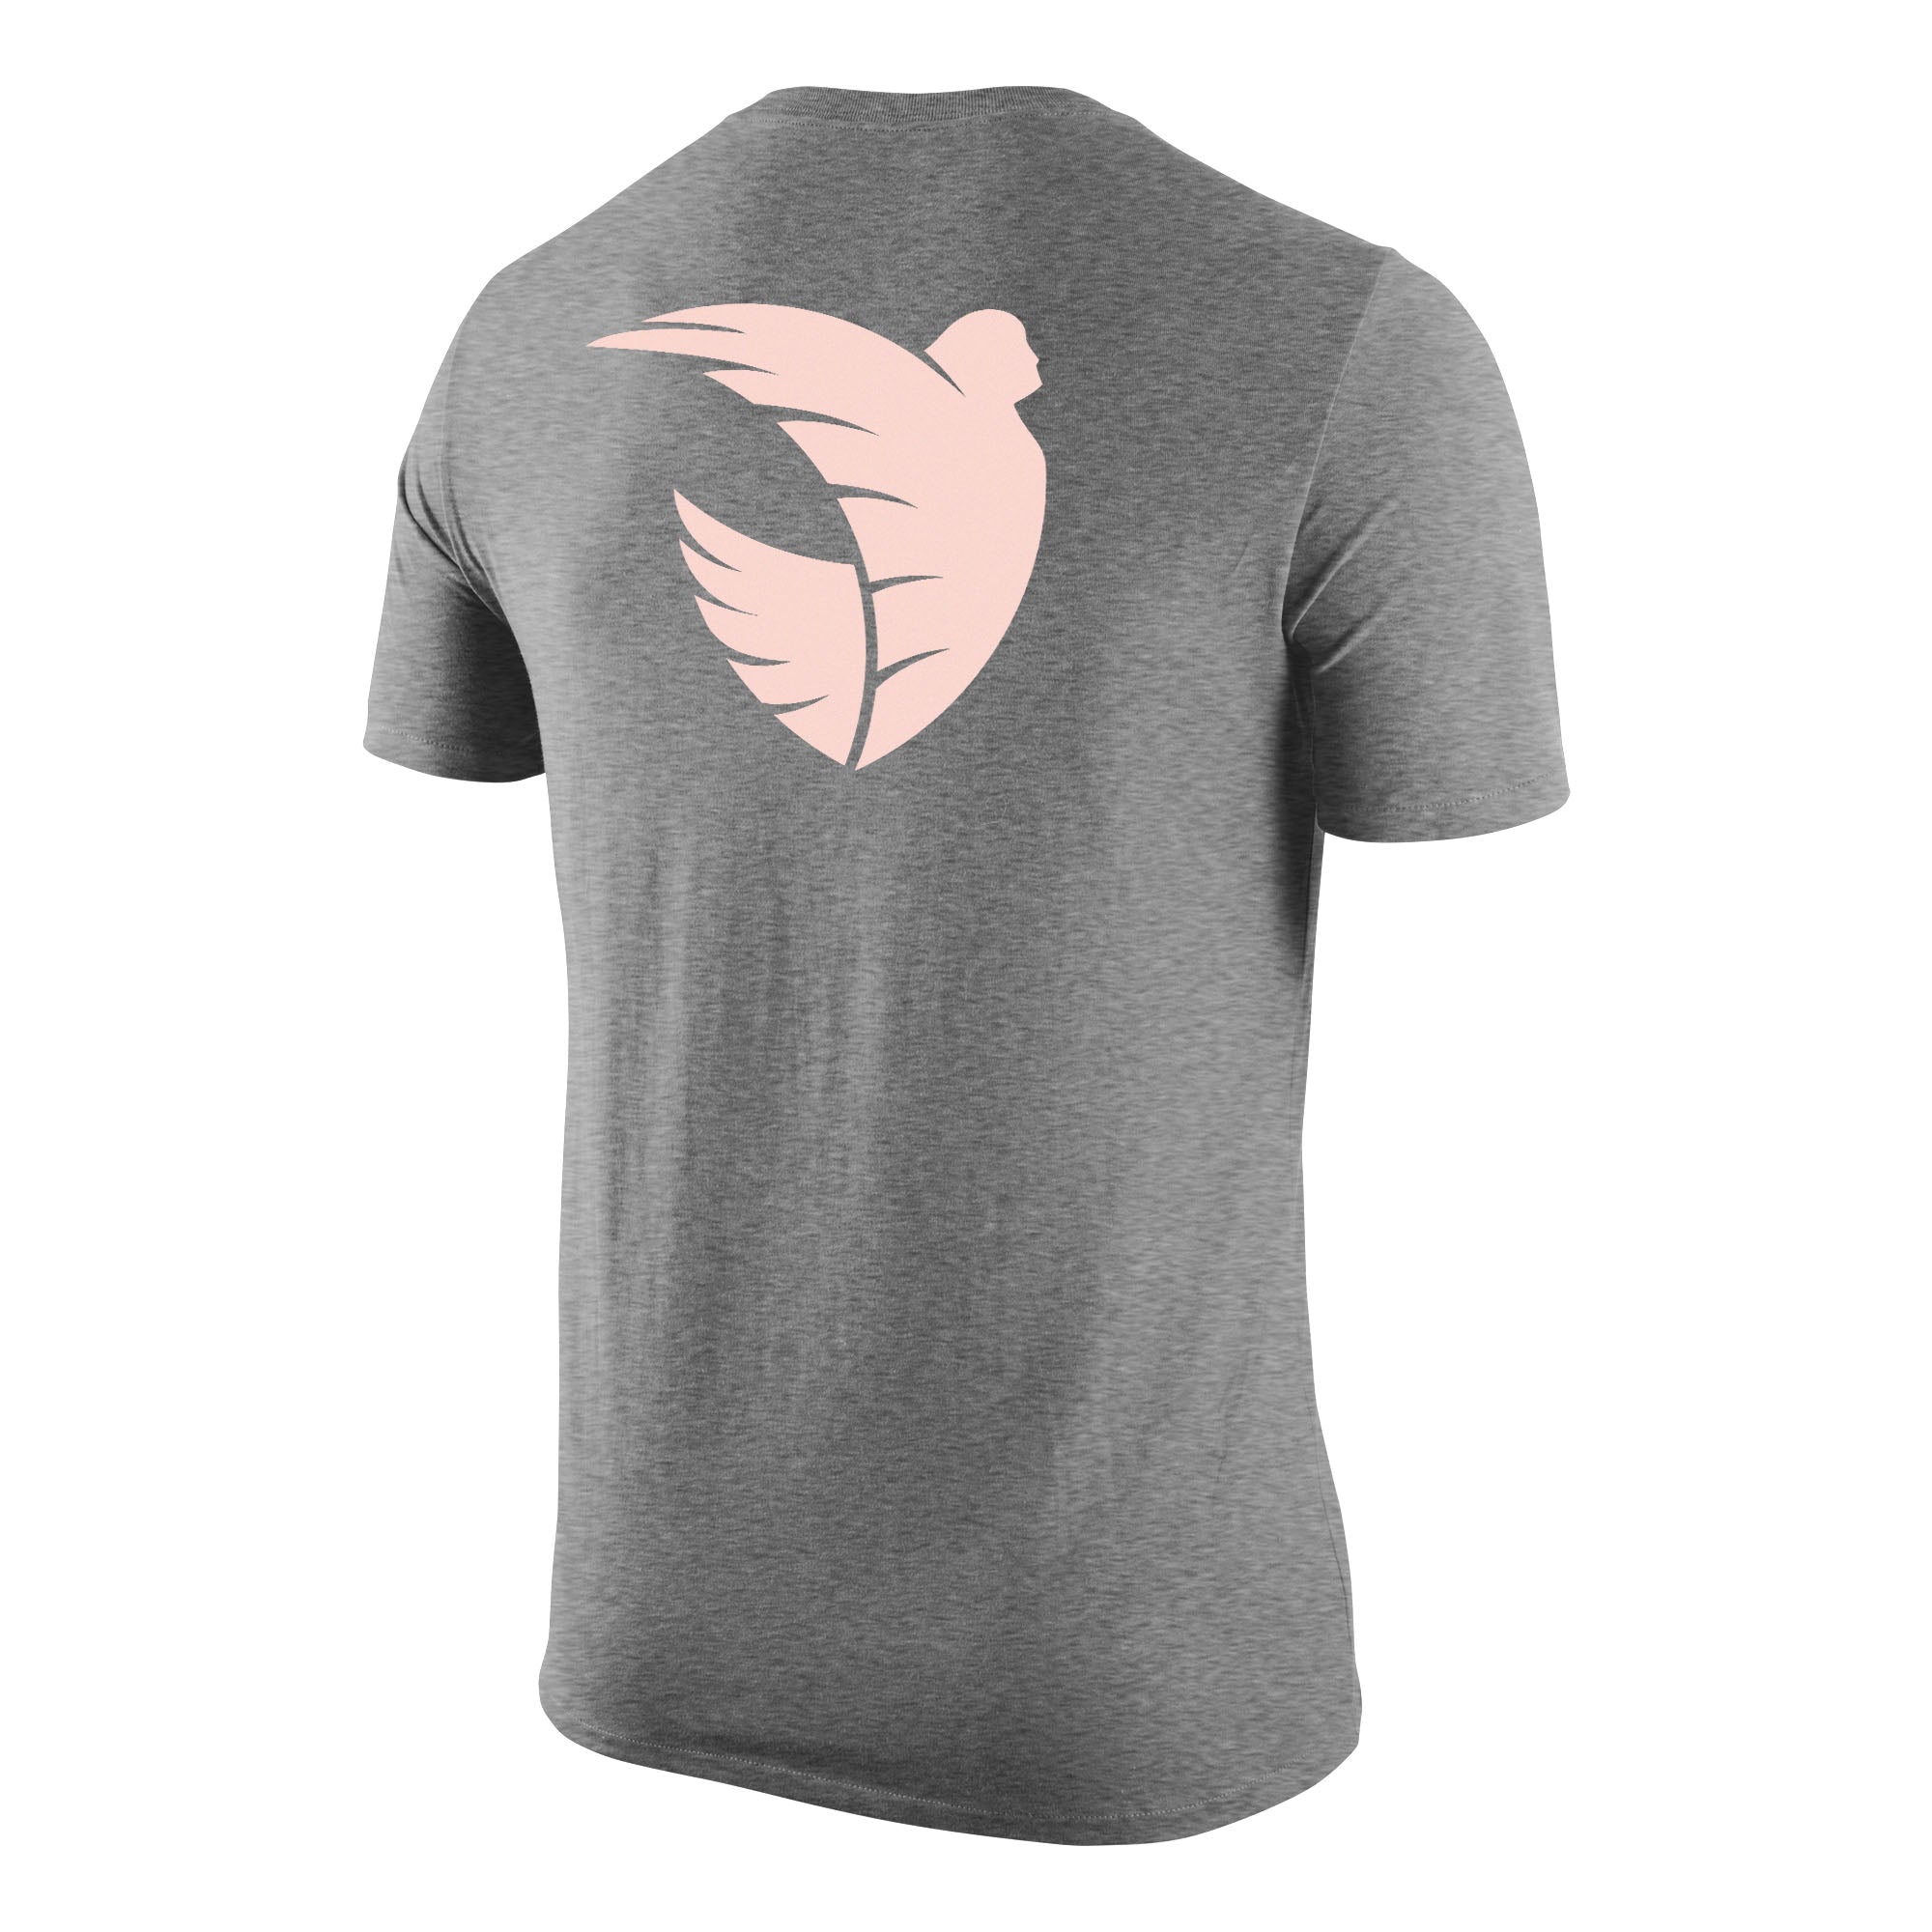 Angel City Nike Camiseta de manga corta unisex Sol Rosa Emblem gris